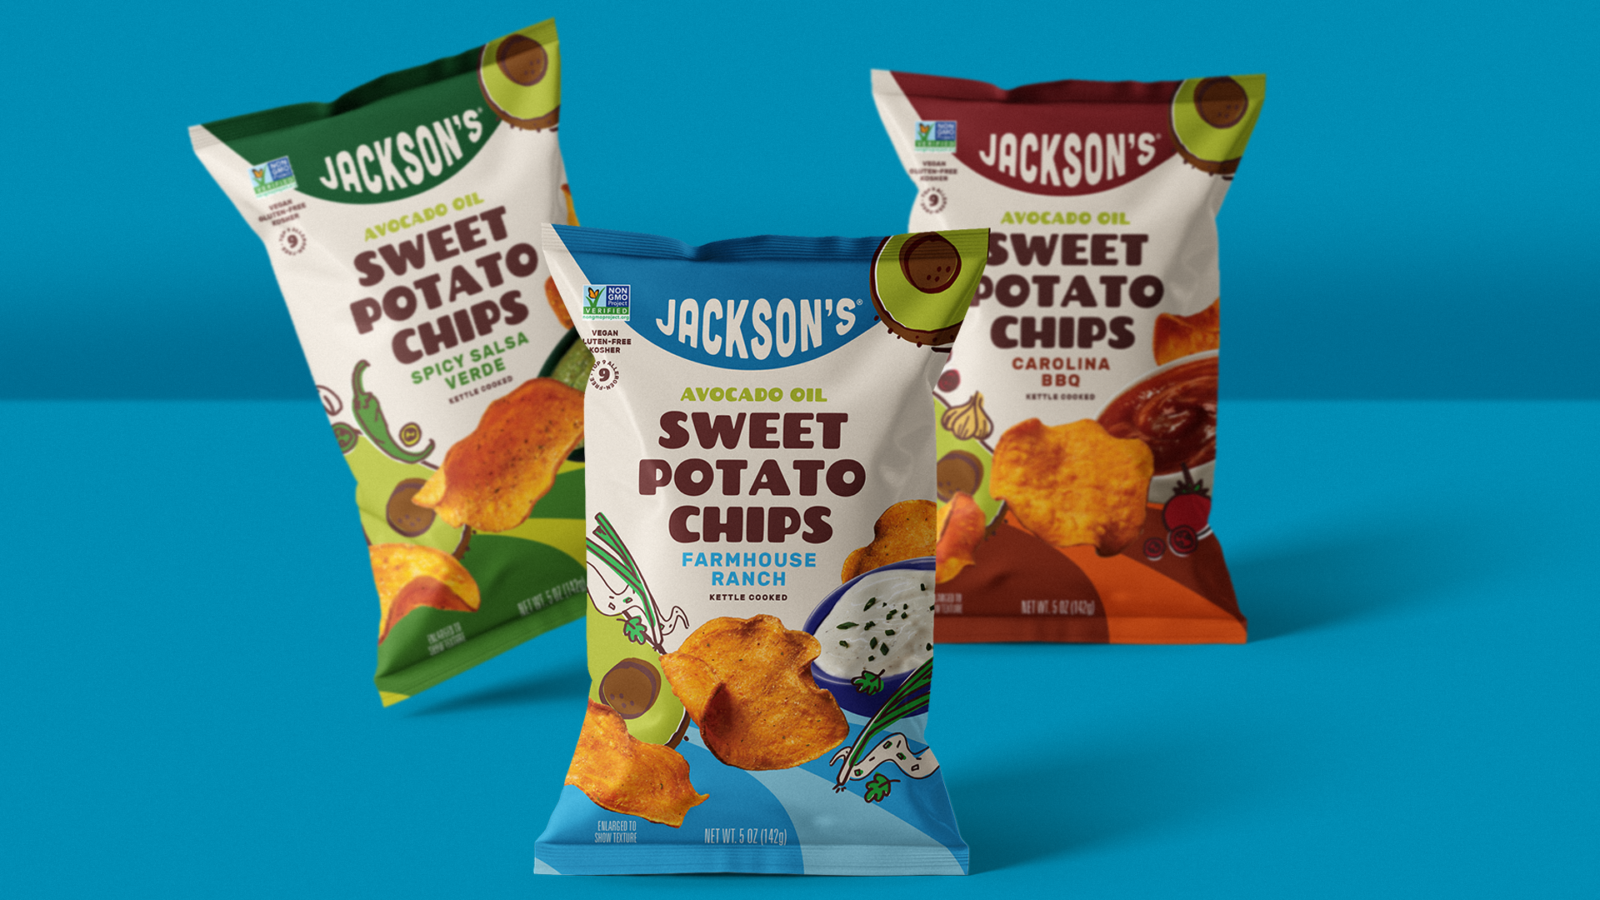 Jackson's Seasoned Line Packaging Design